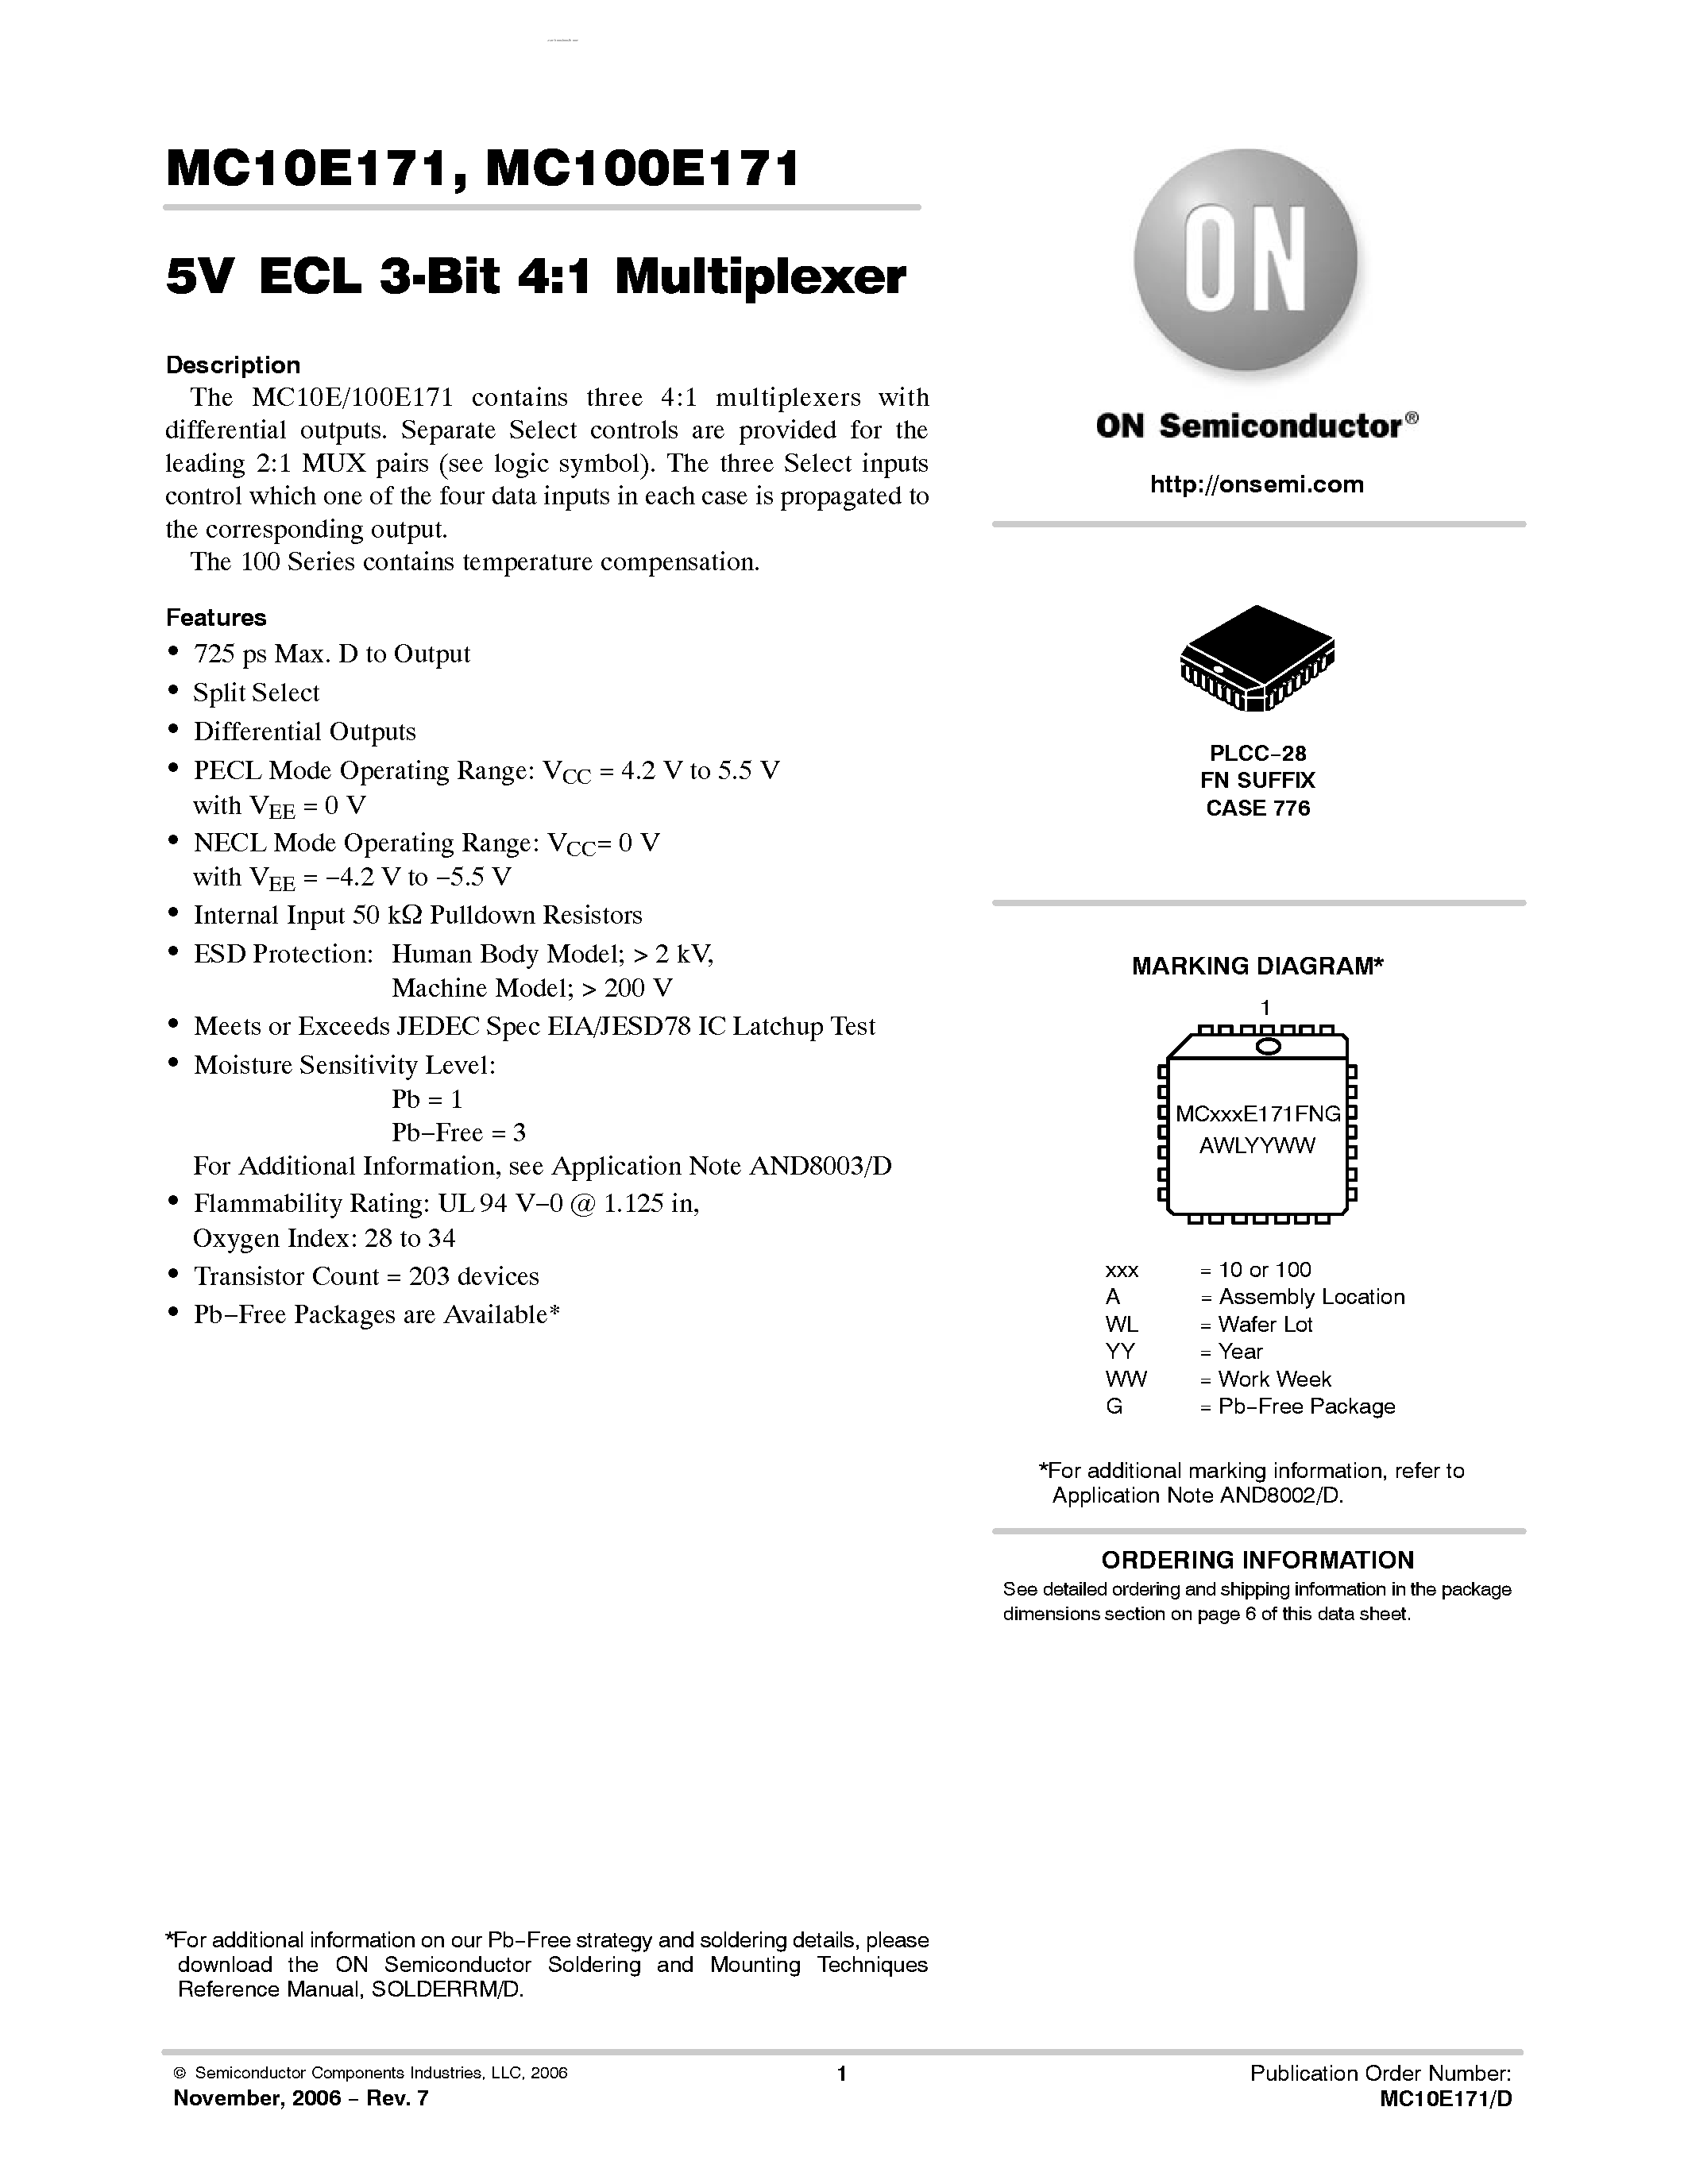 Datasheet MC100E171 - 3-BIT 4:1 MULTIPLEXER page 1